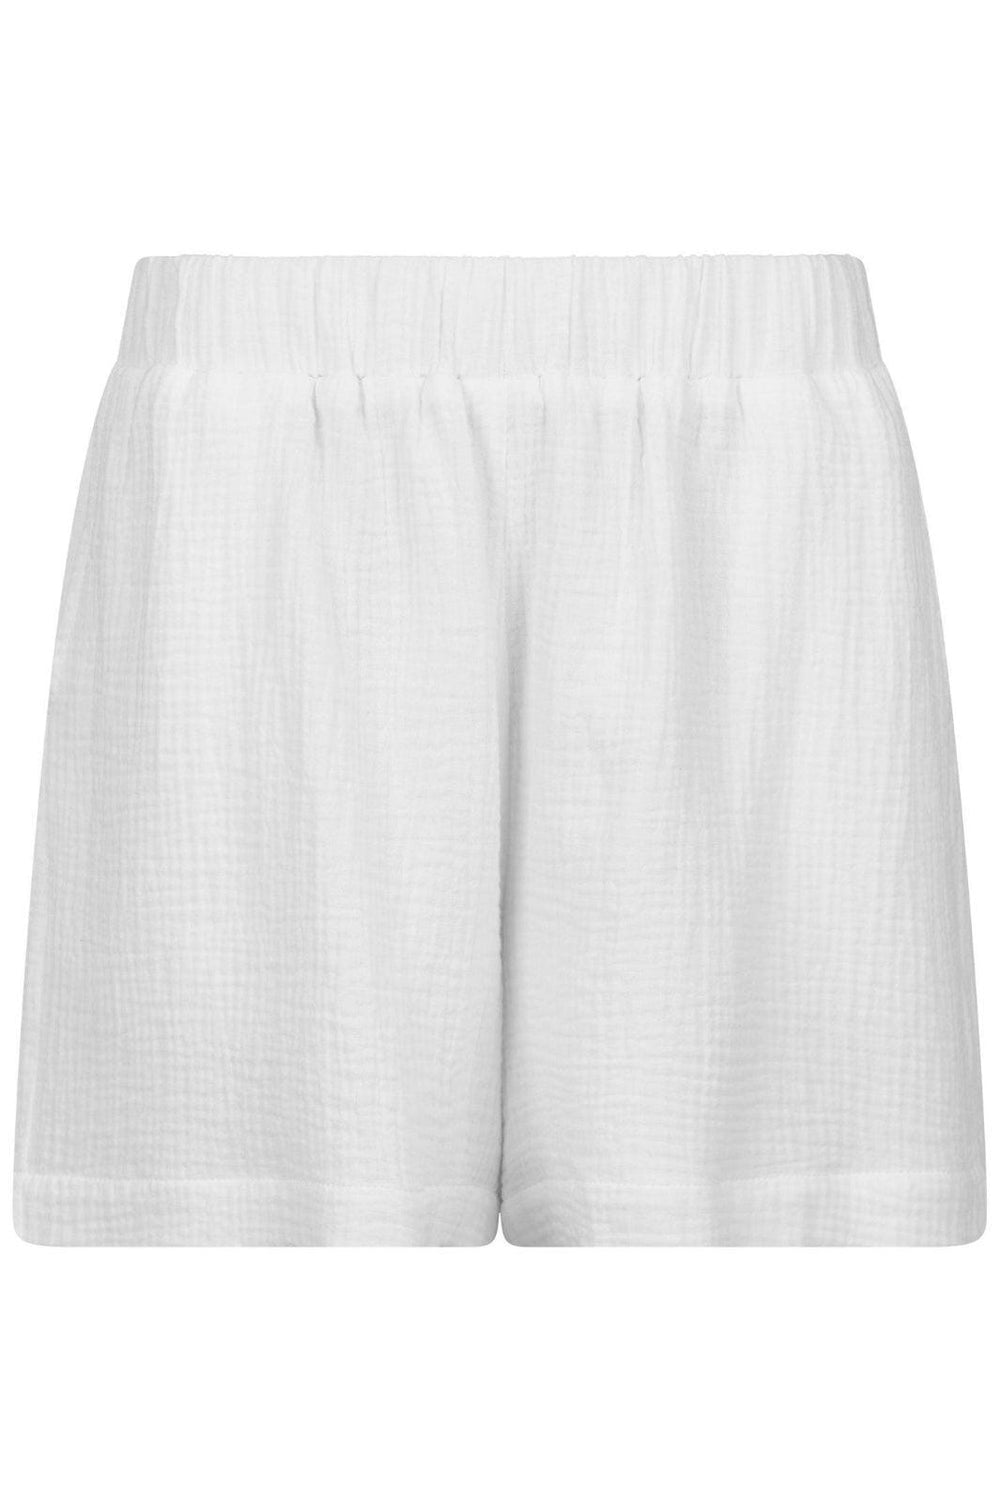 Neo Noir - Ally Waffle Shorts - Off White Shorts 